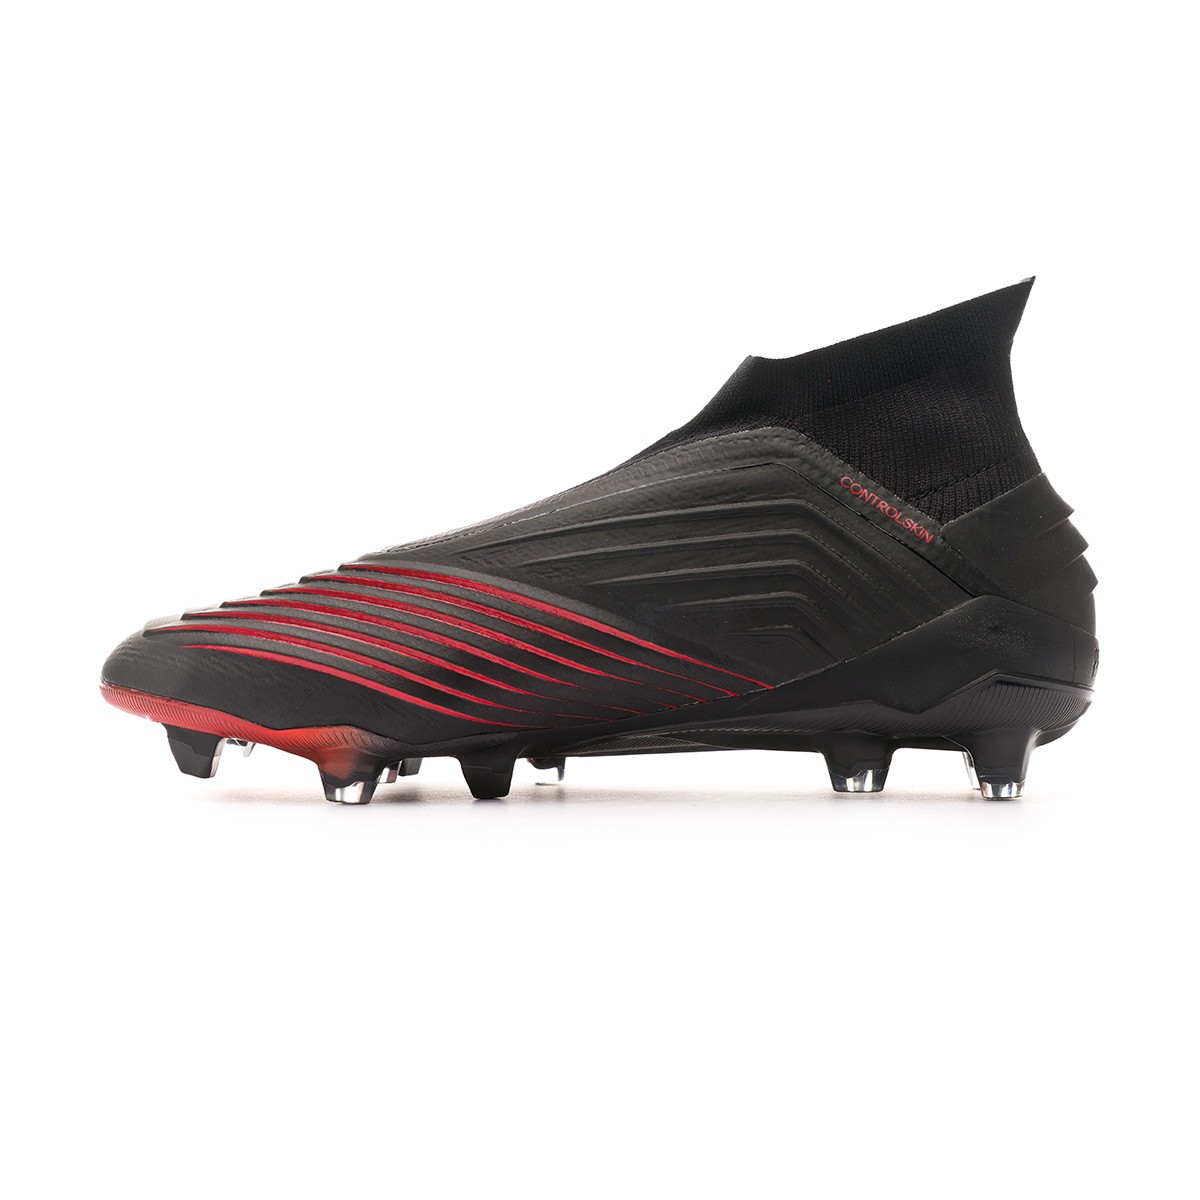 adidas predator 19 fg football boots